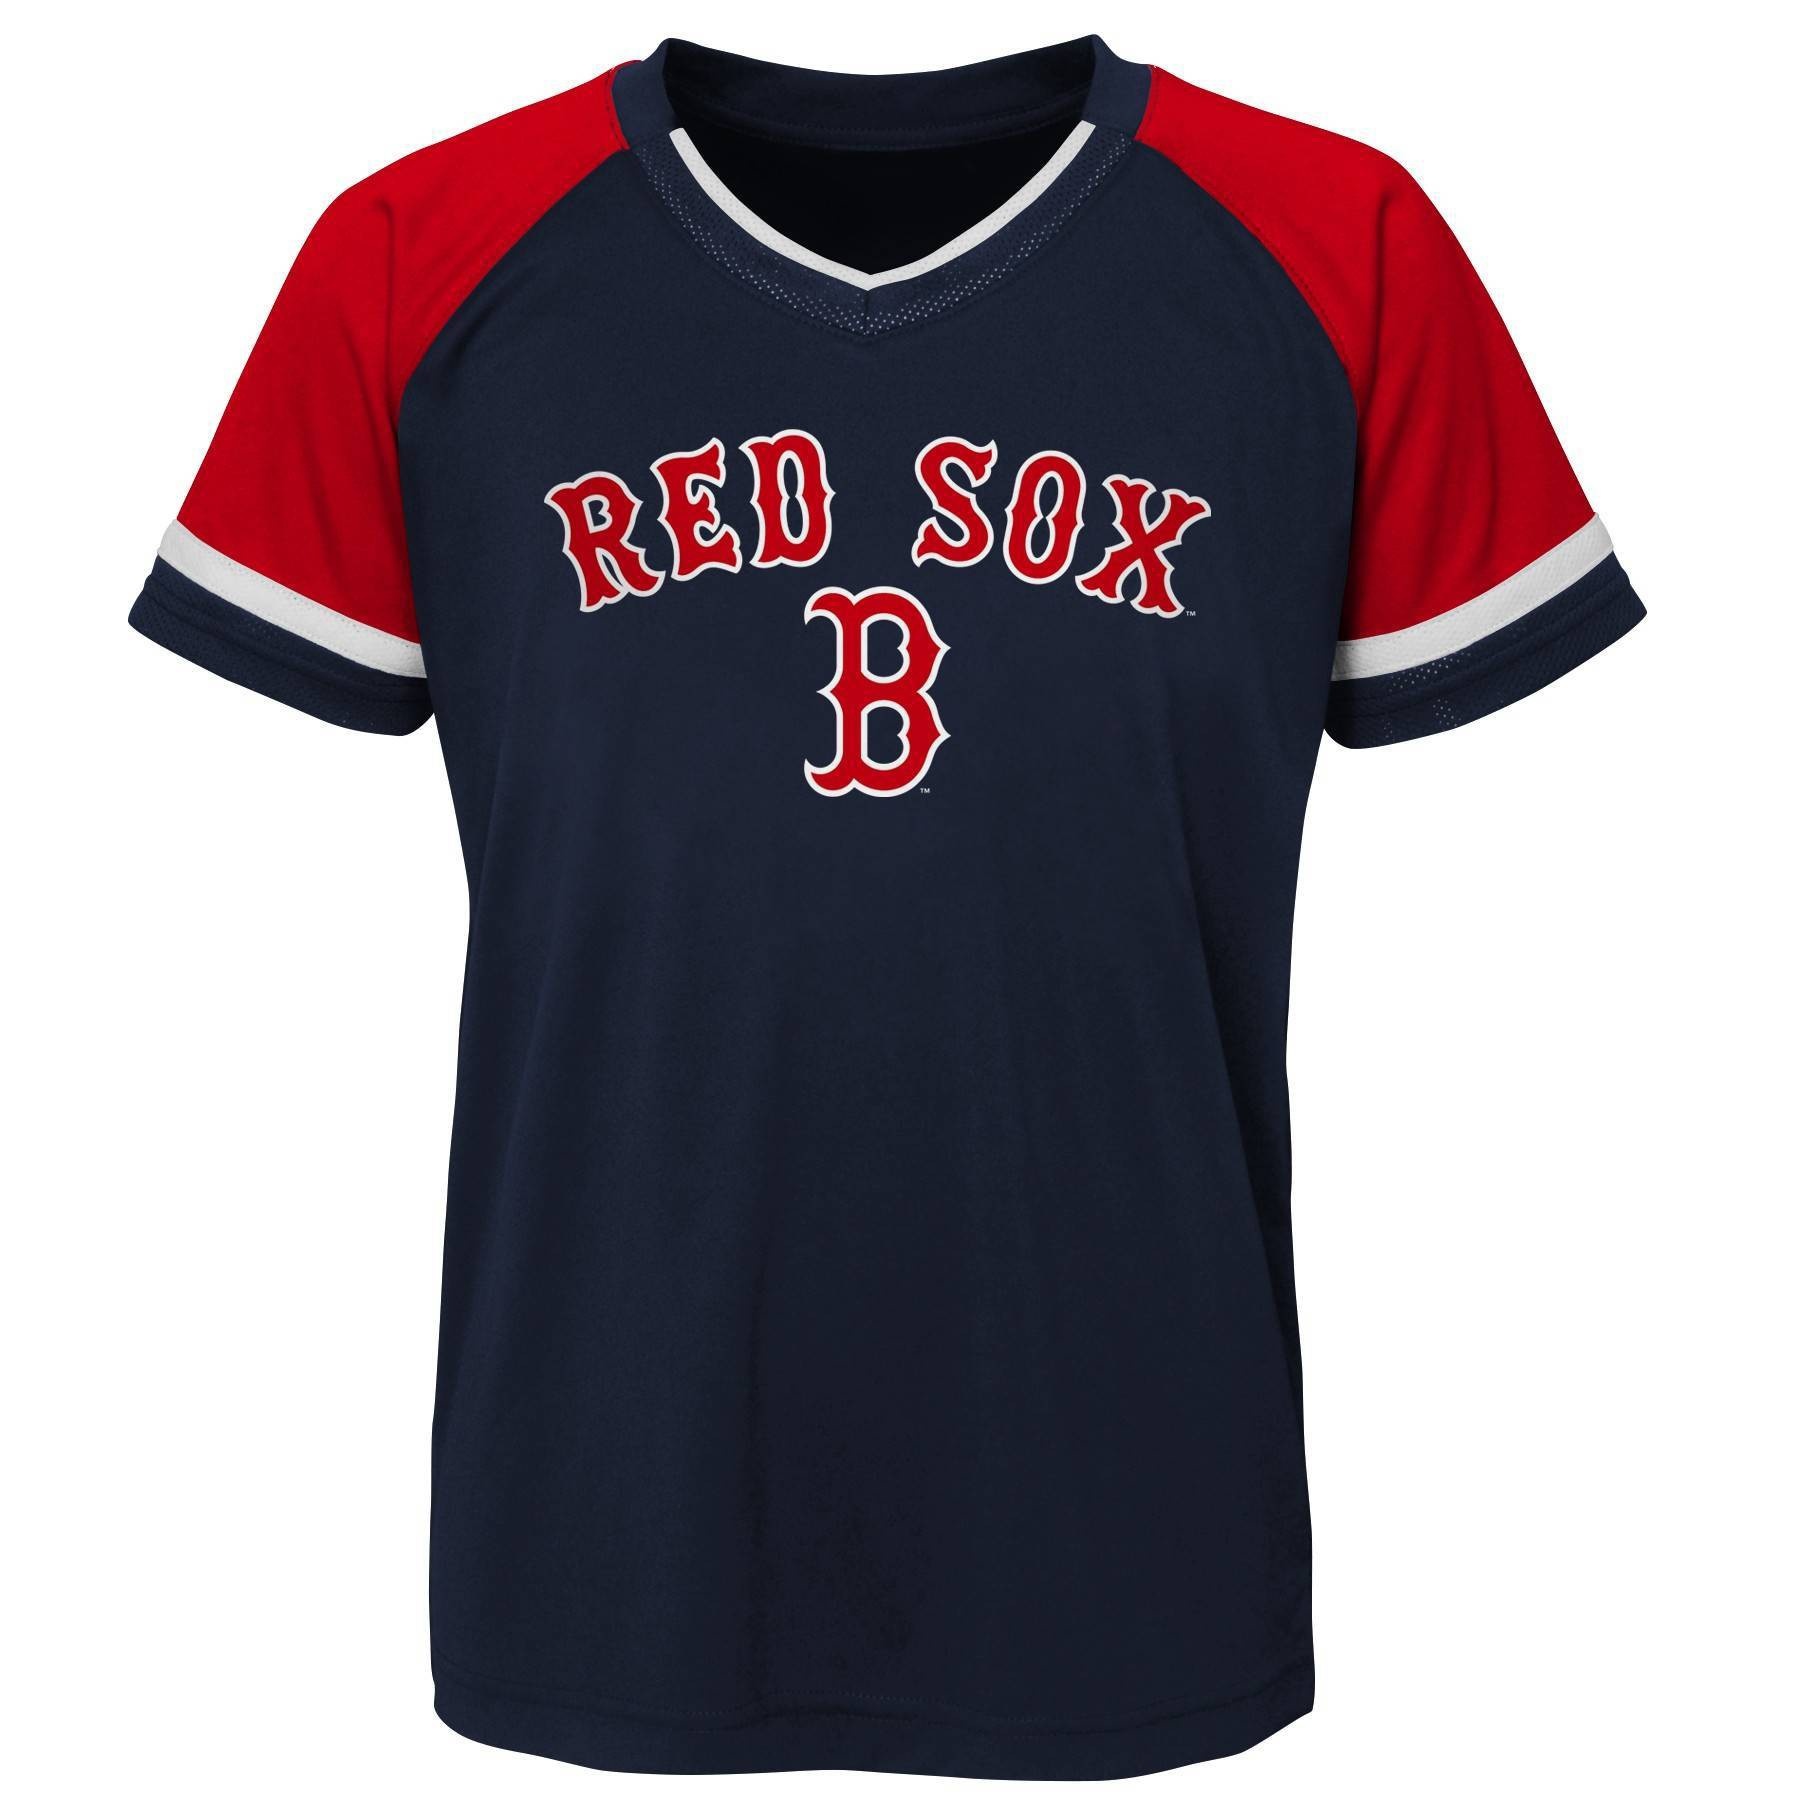 MLB Boston Red Sox Boys' Pullover Jersey - XL 1 ct